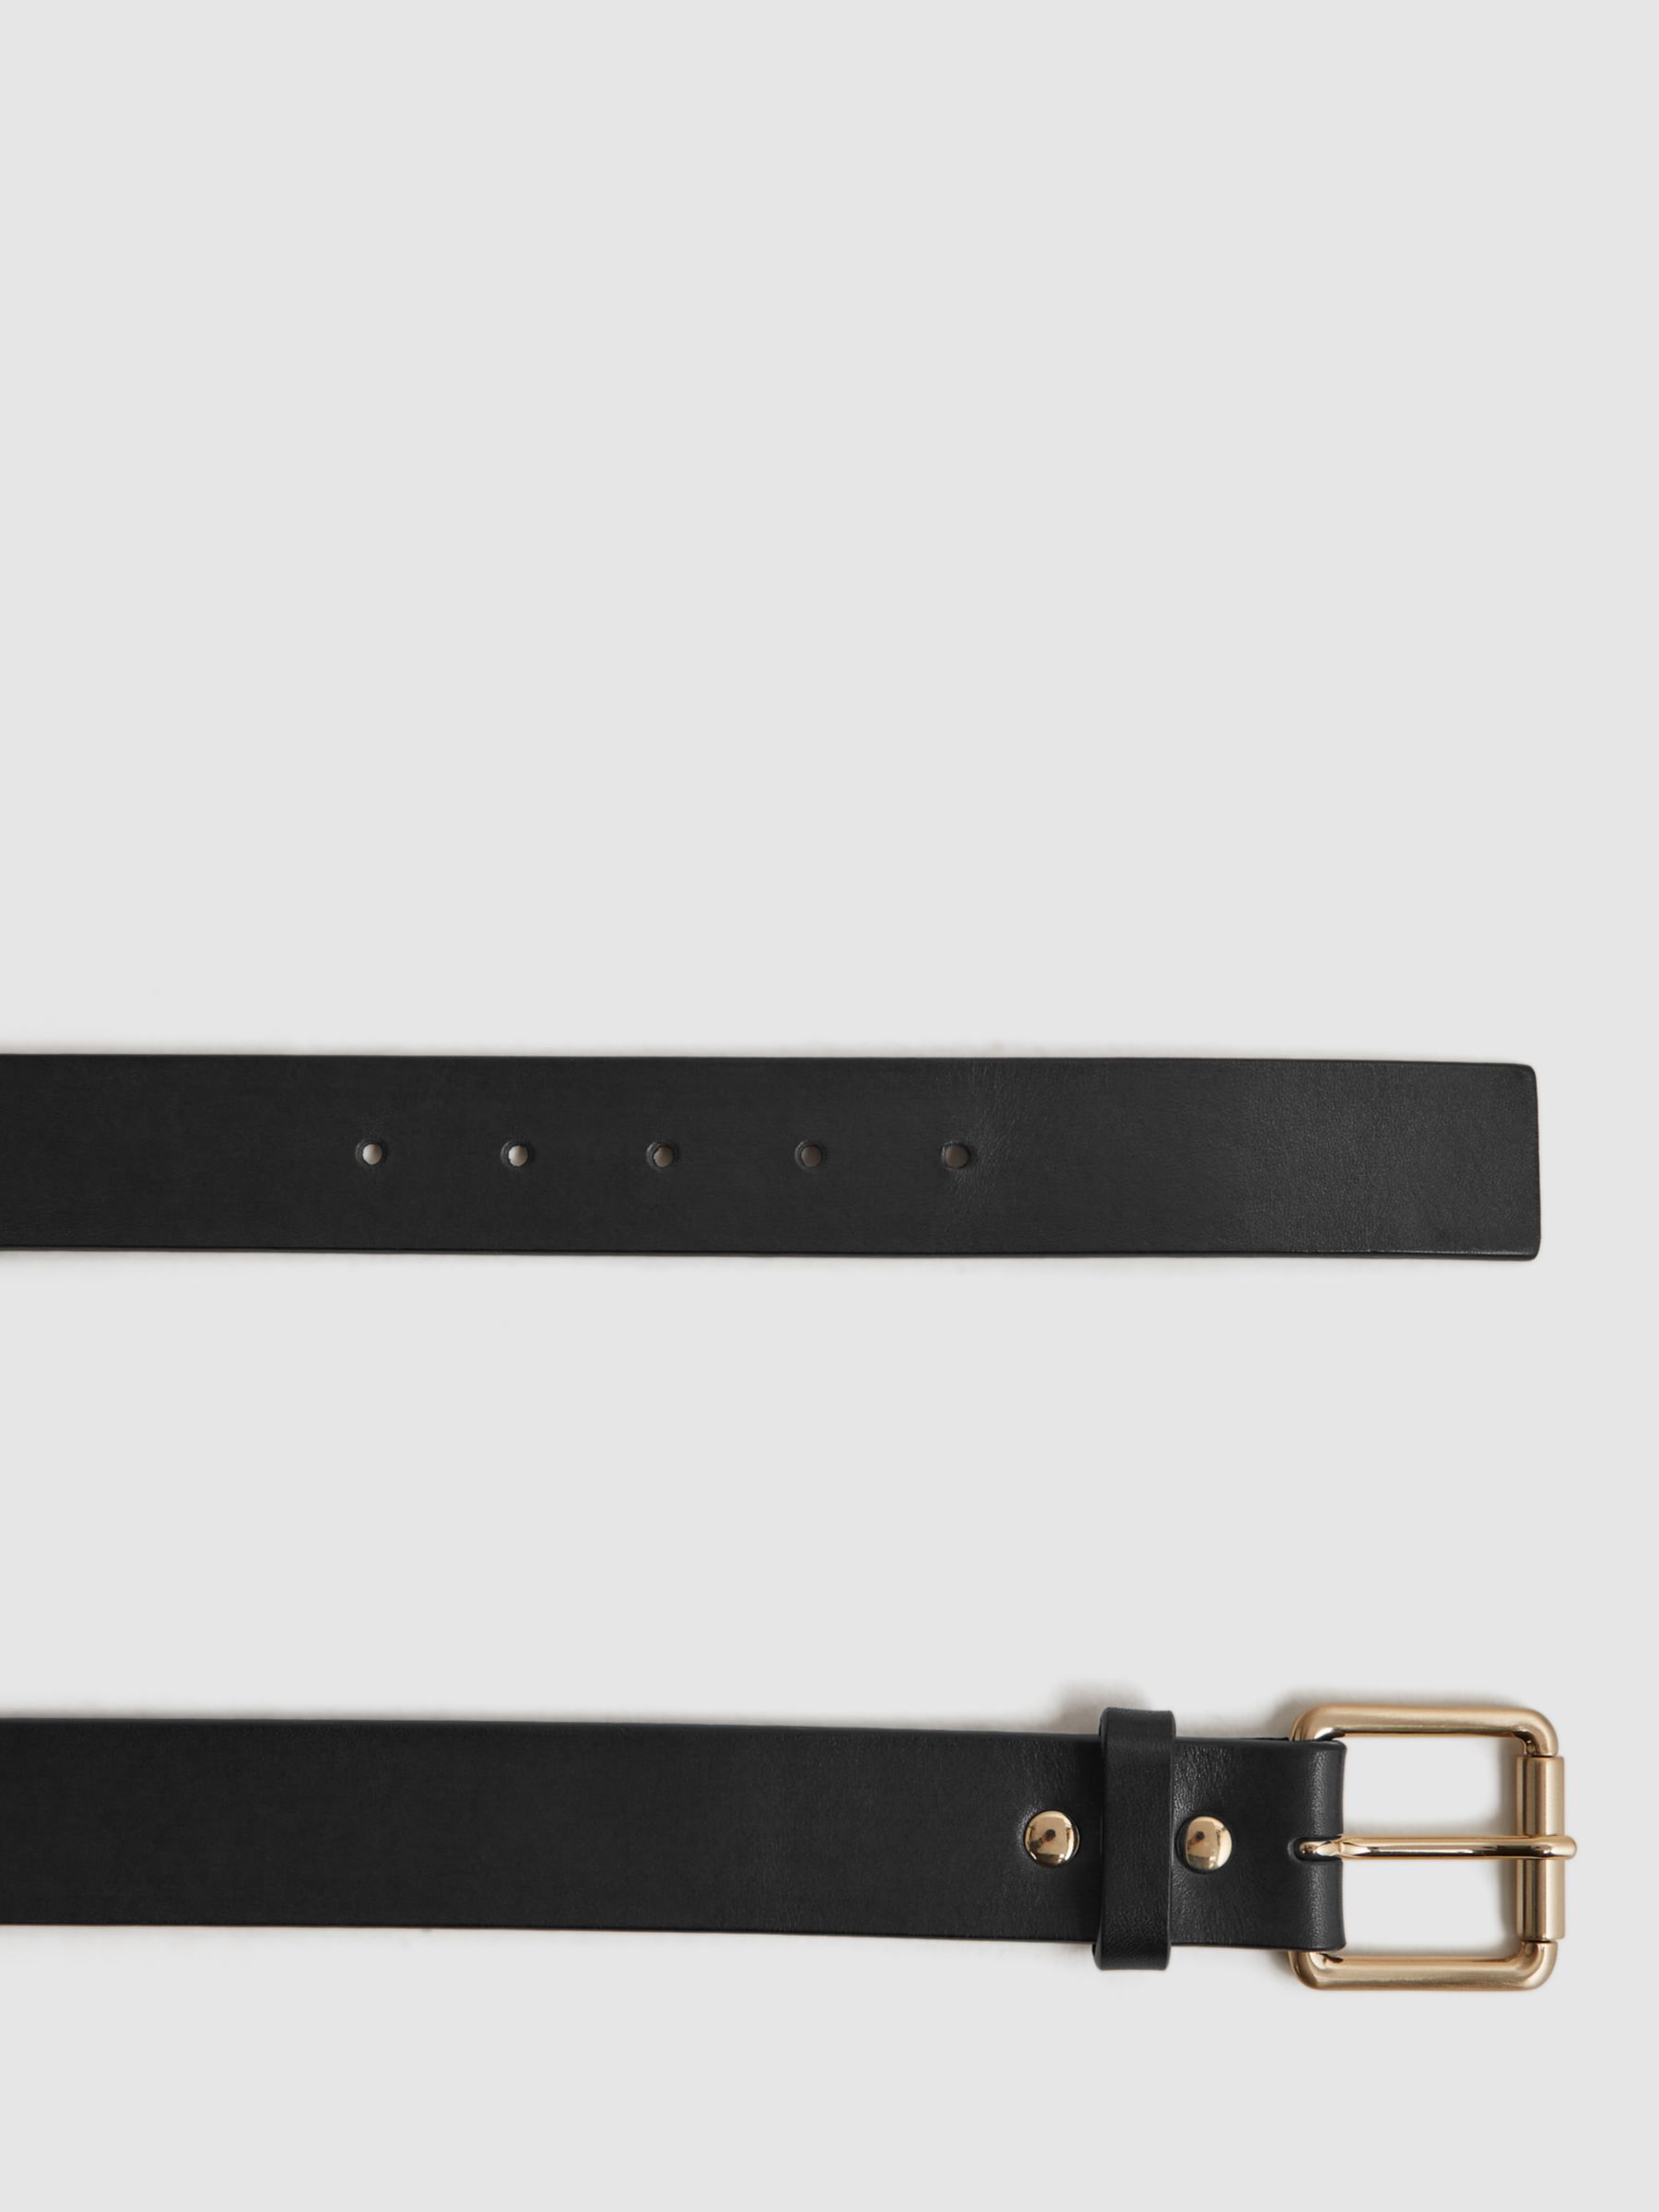 Reiss Grayson Leather Belt, Black, 36R